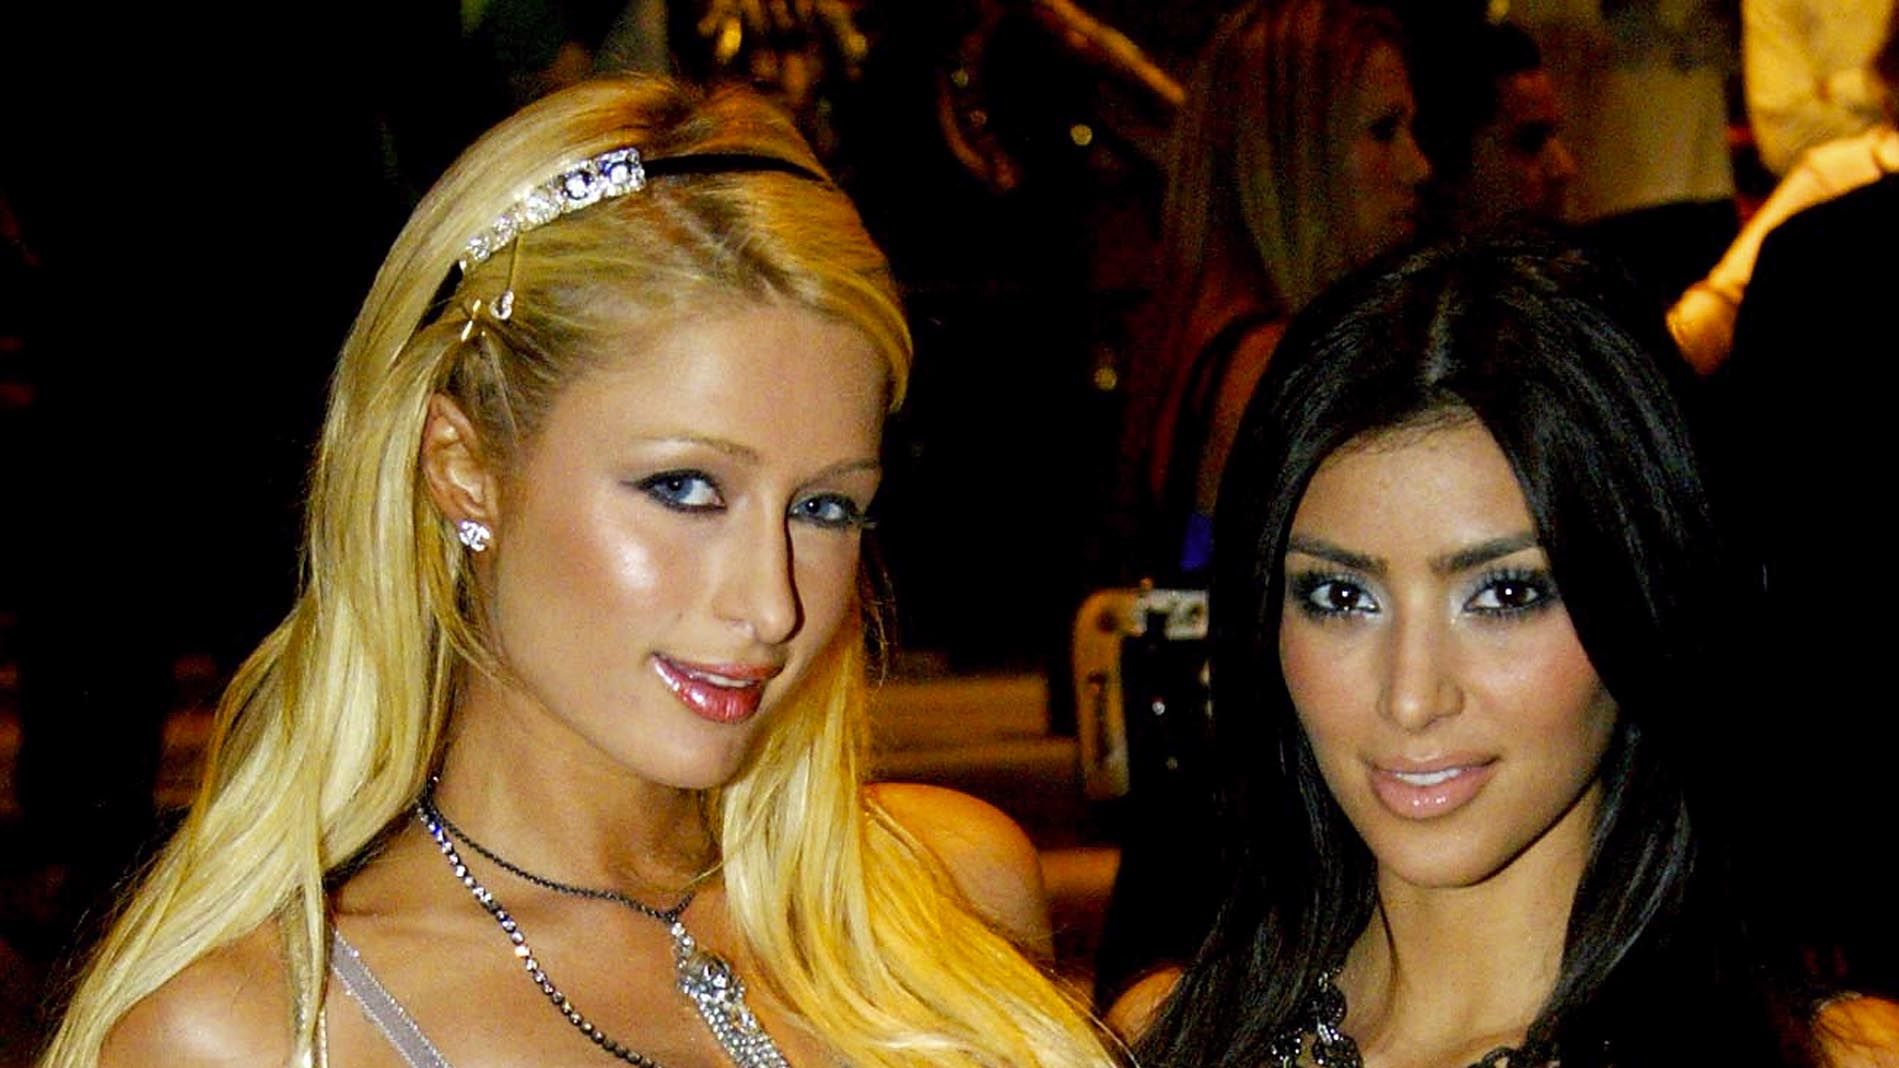 The History Behind Kim Kardashian's And Paris Hilton's Rocky Relationship